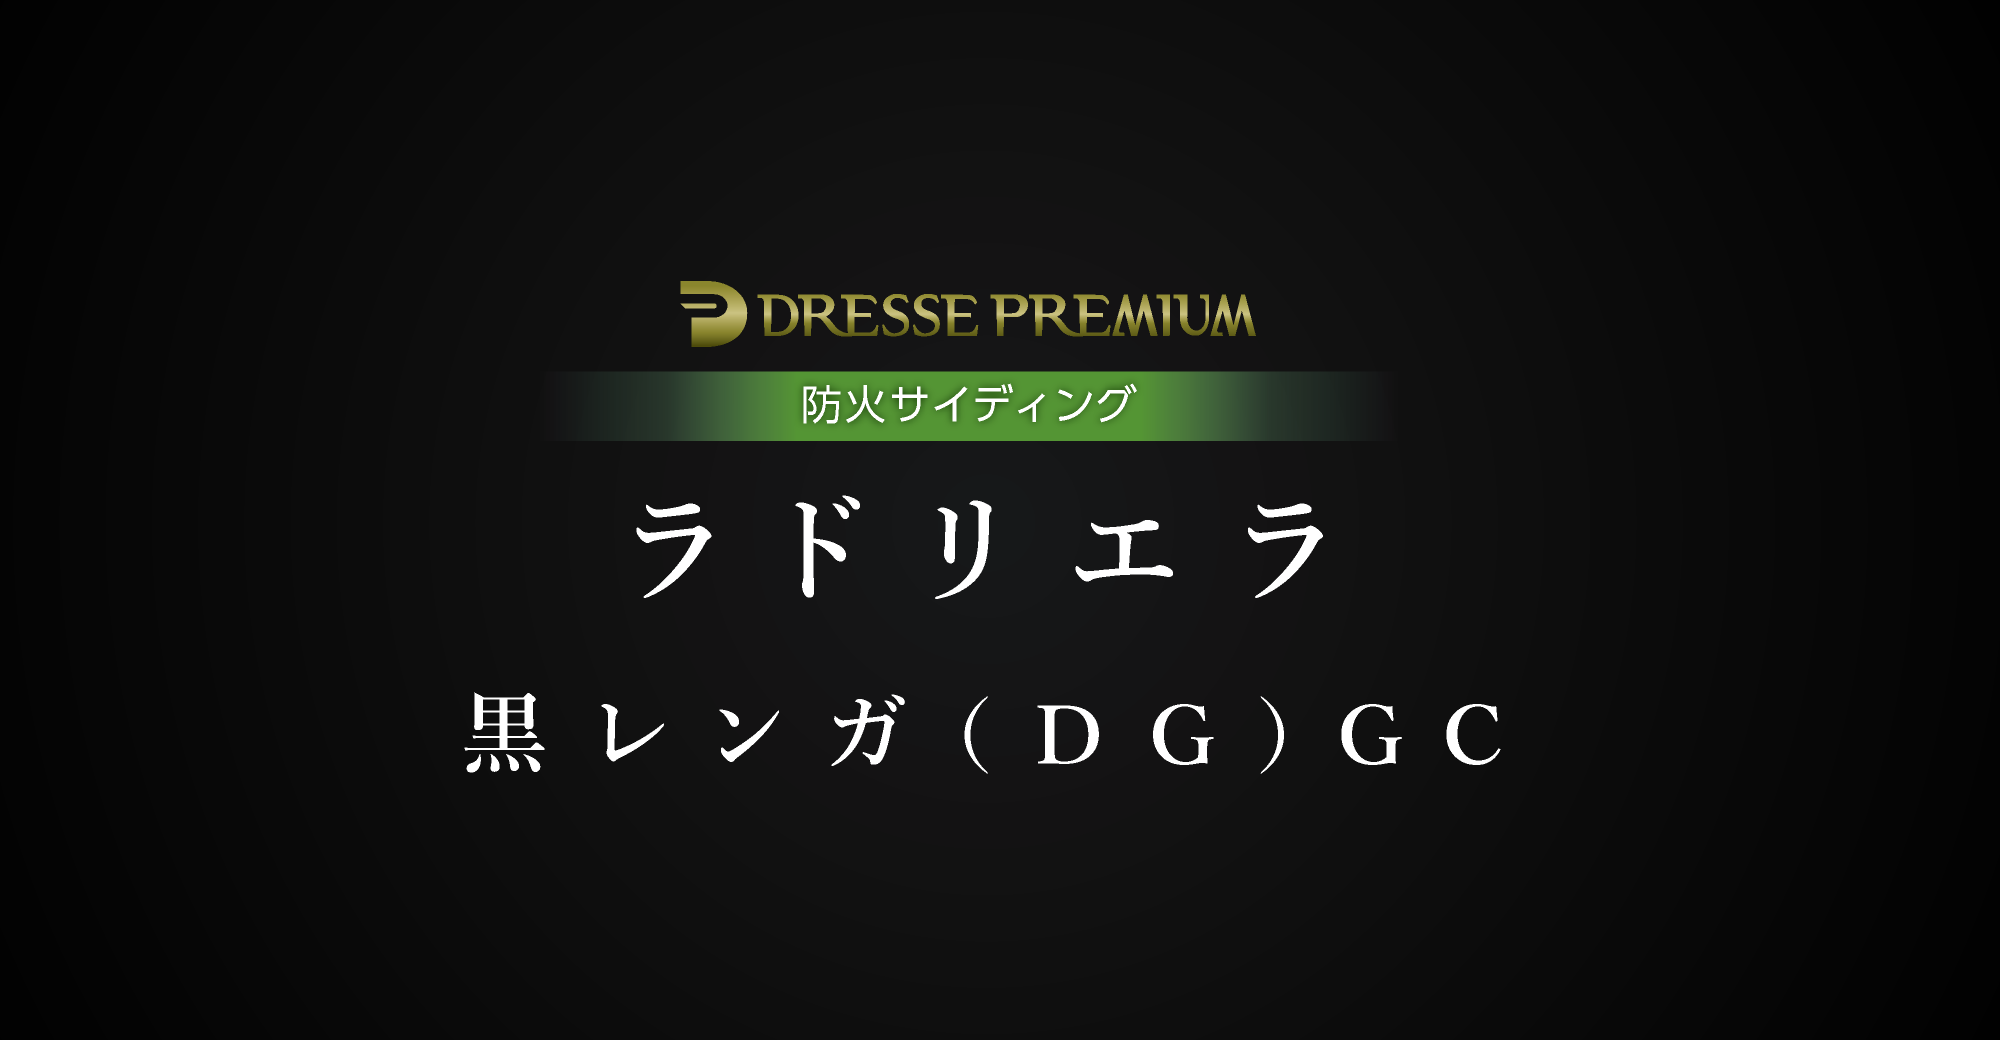 DRESSE PREMIUM 防火サイディング「ラドリエラ」黒レンガ(DG)GC